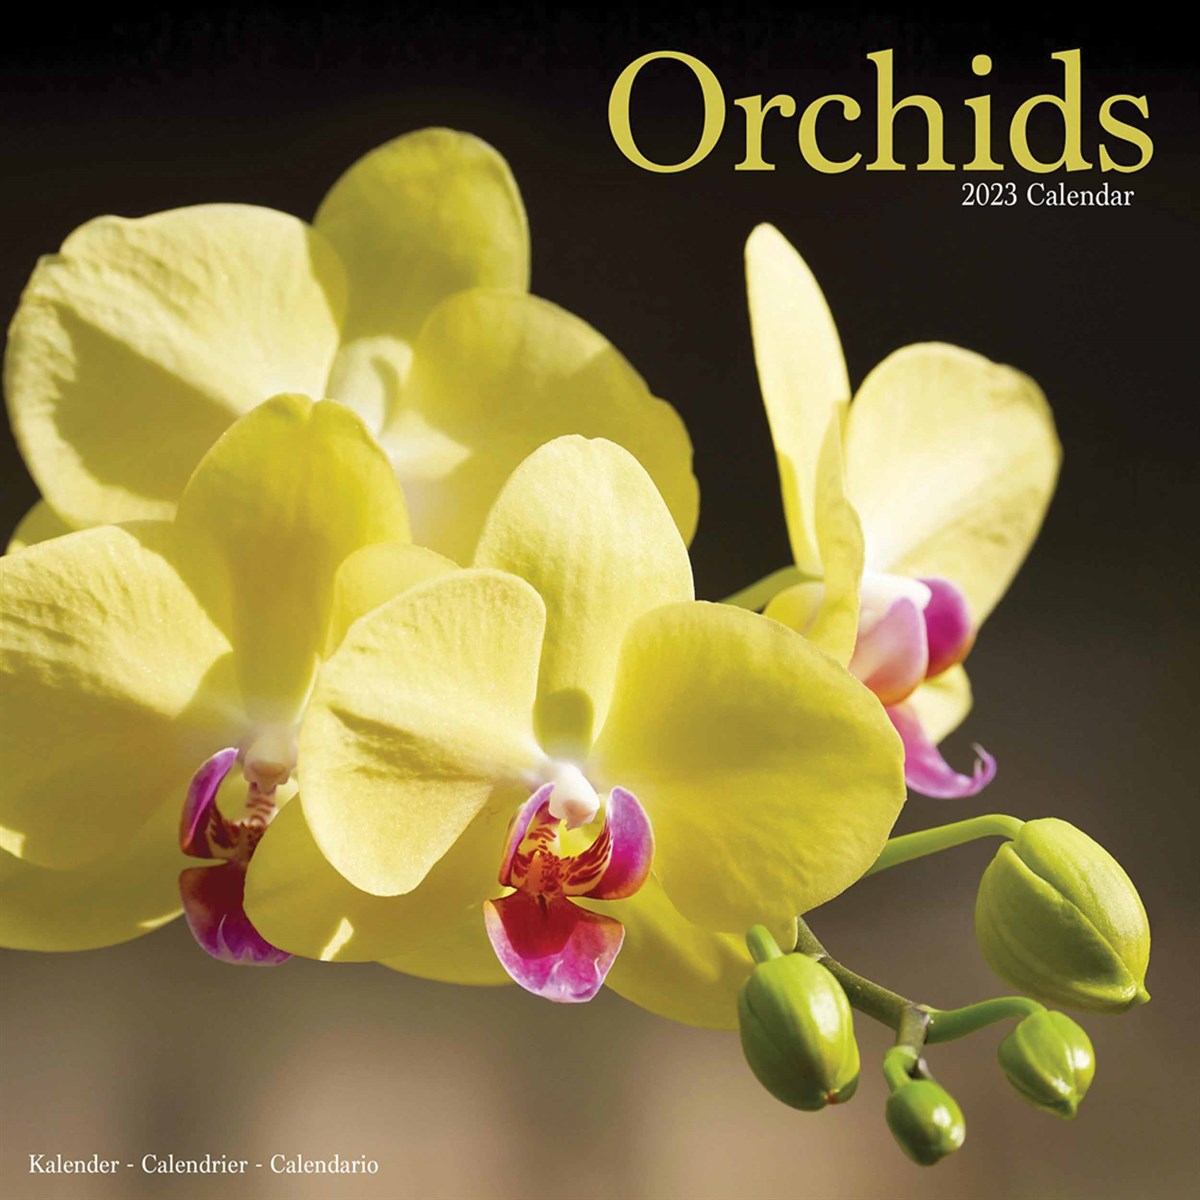 Orchids 2023 Calendars